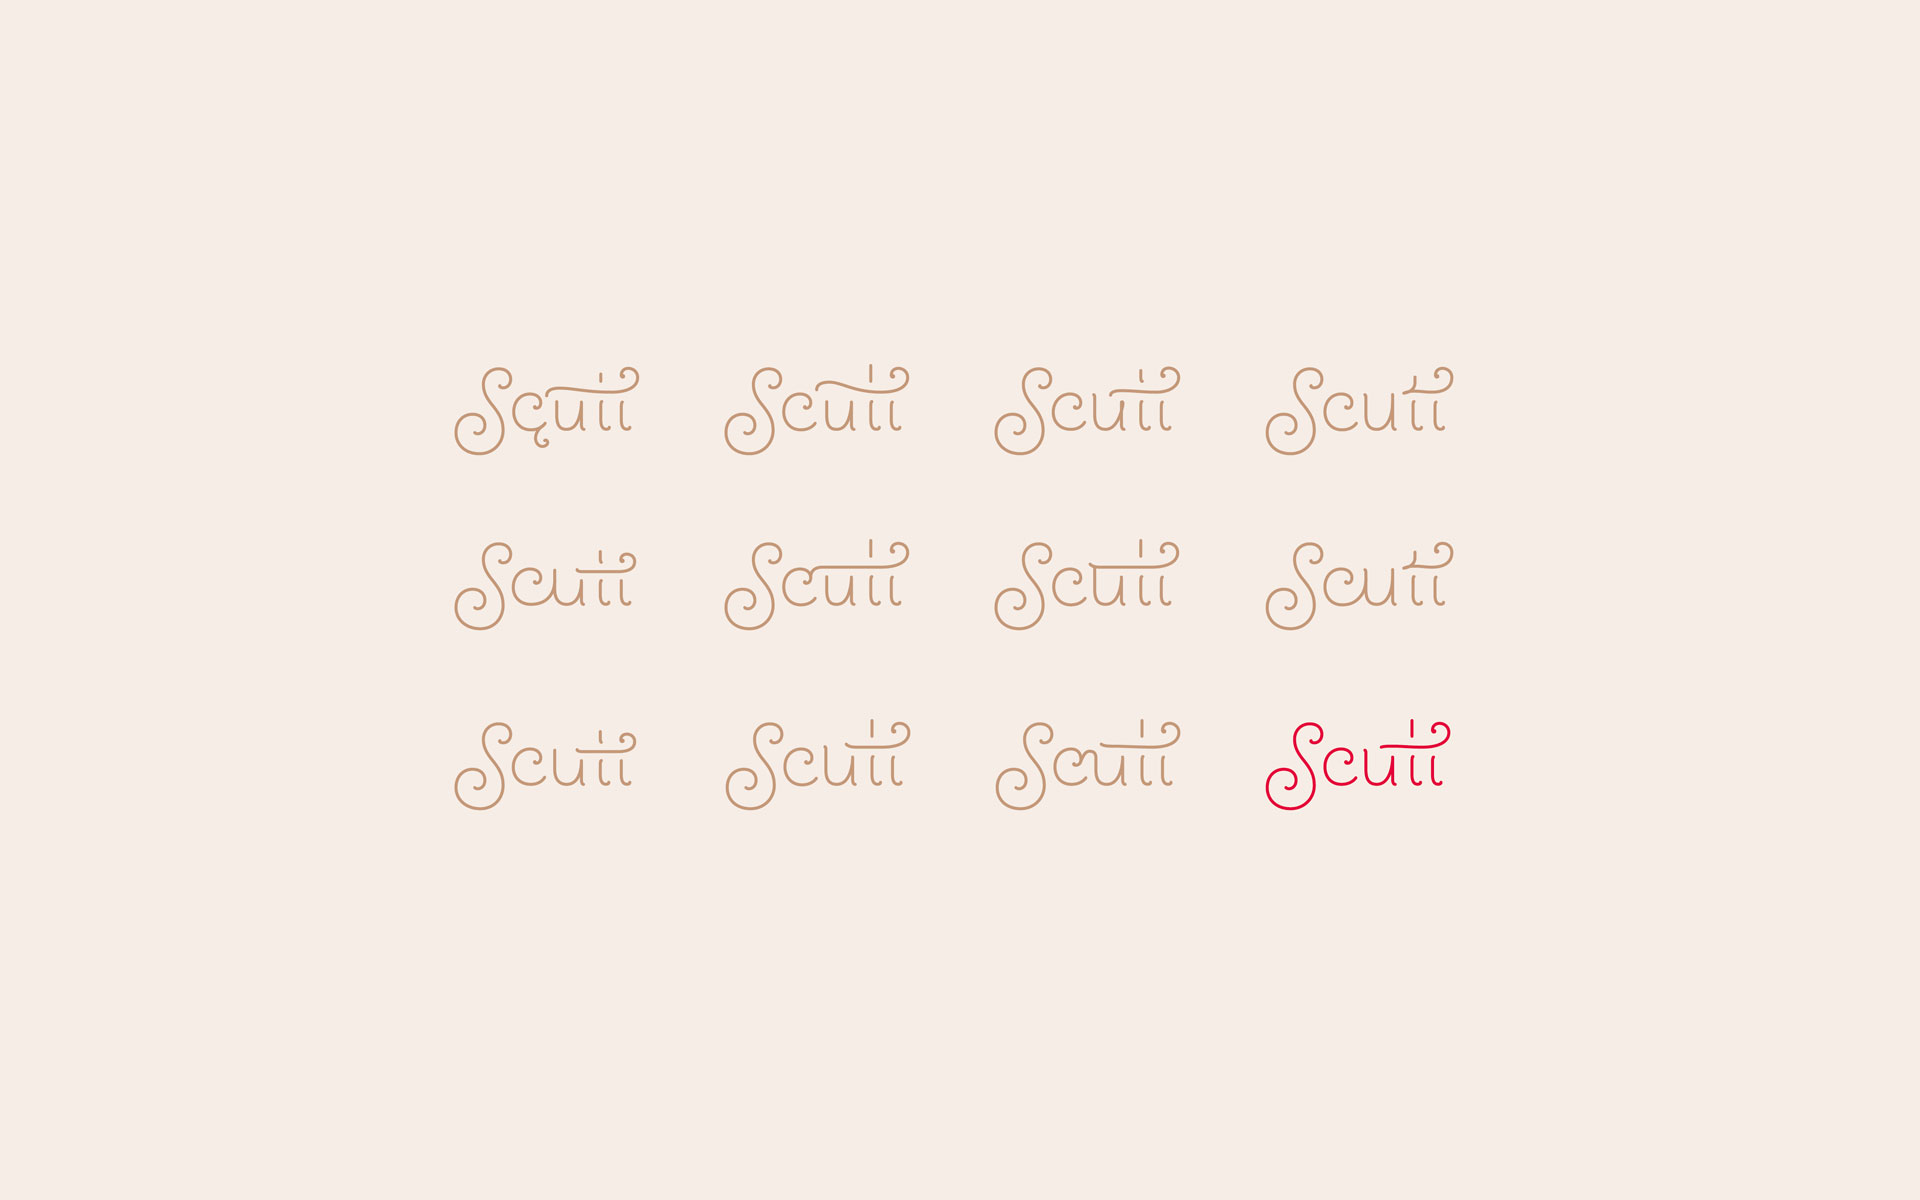 Scuti - Gourmet Desserts & Chocolates - Identity design process